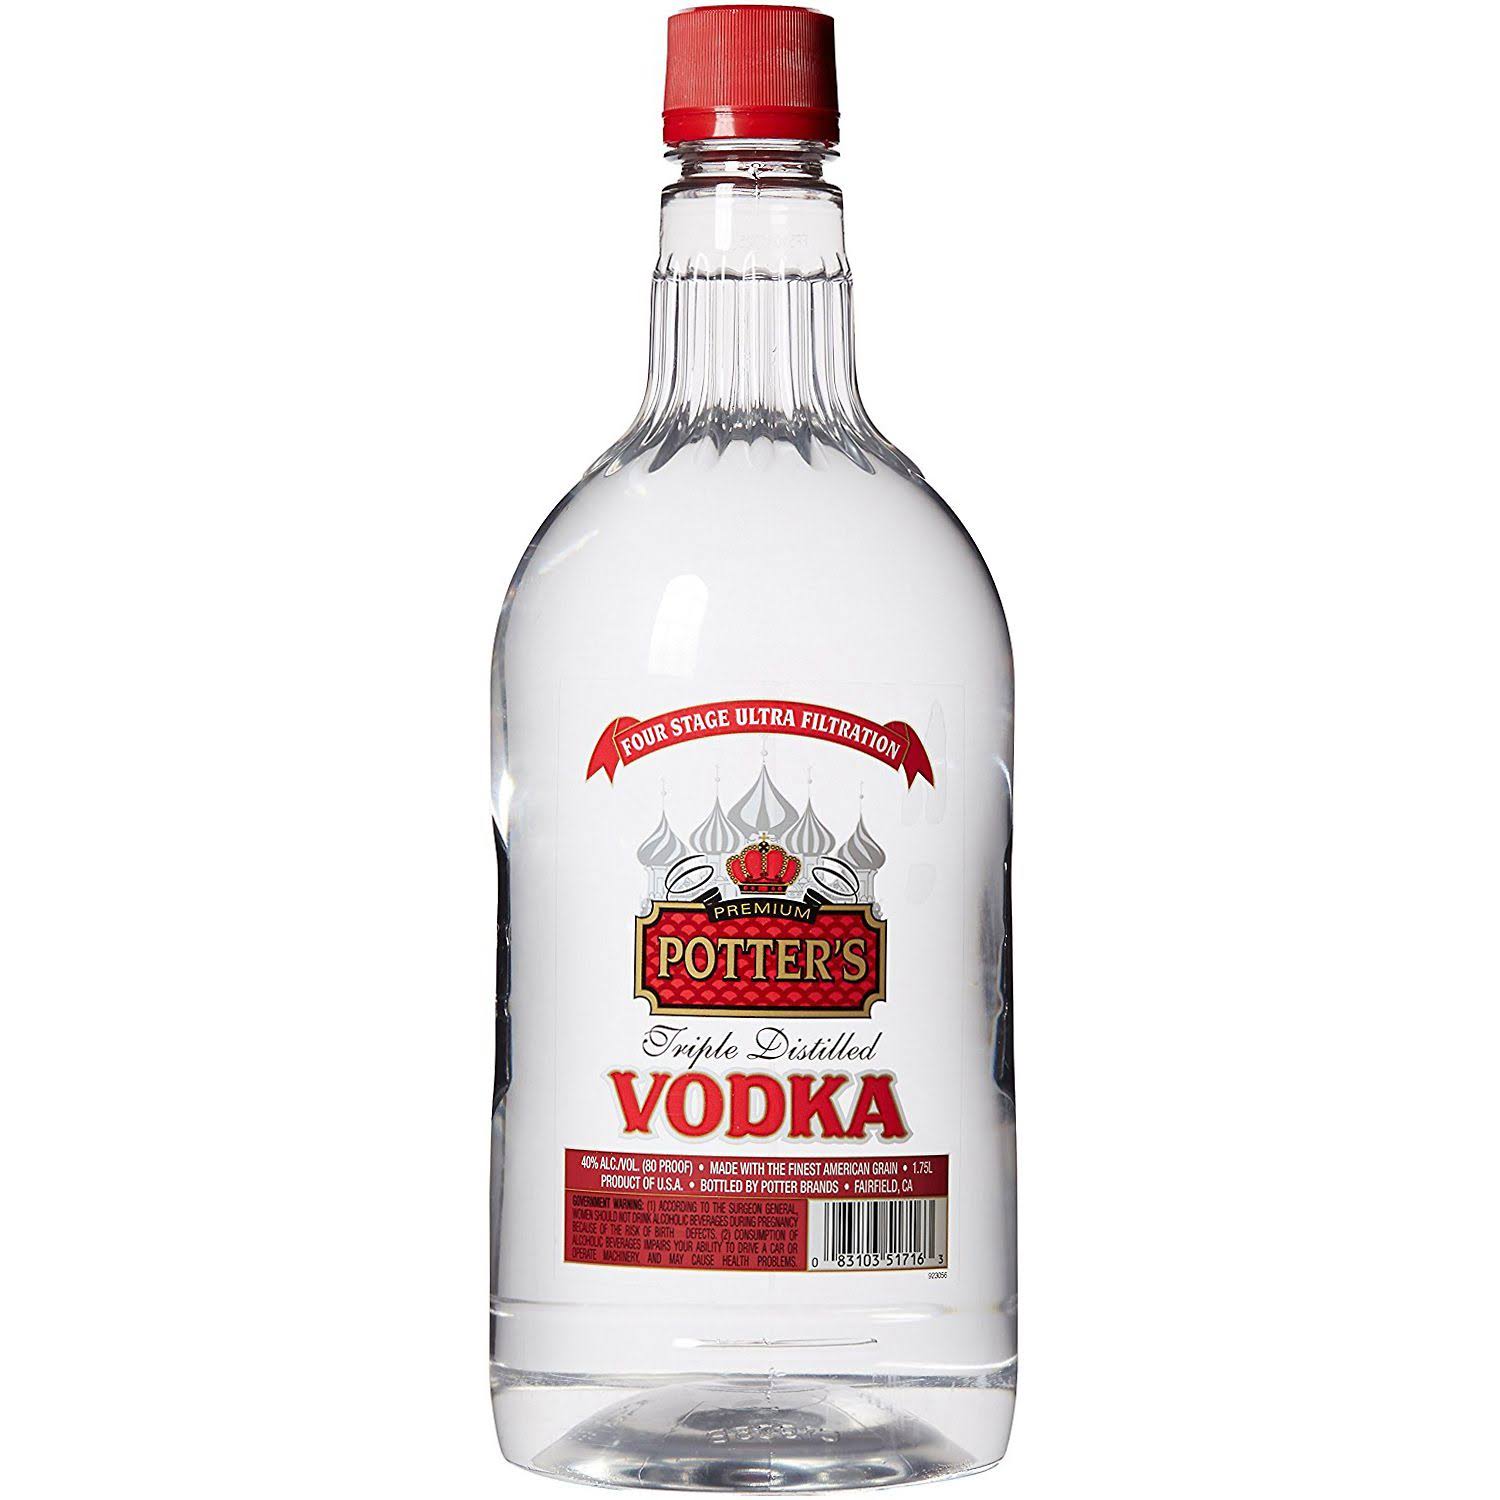 Potter's Vodka (1.75 L)